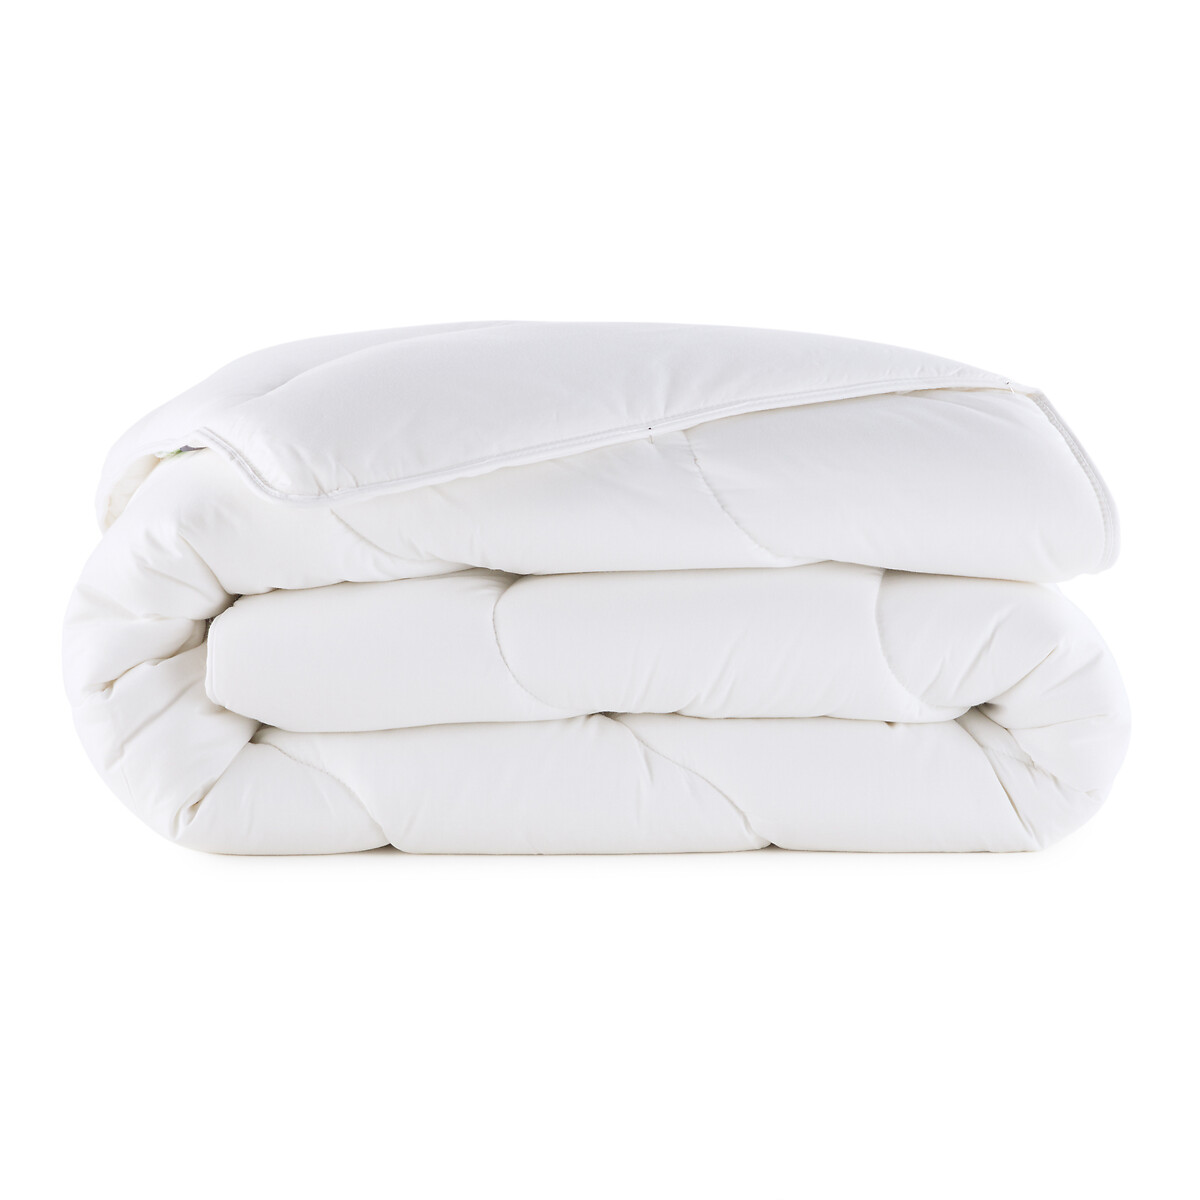 Одеяло La Redoute Синтетическое 250 гм2 с обработкой Proneem 260 x 240 см белый, размер 260 x 240 см - фото 2